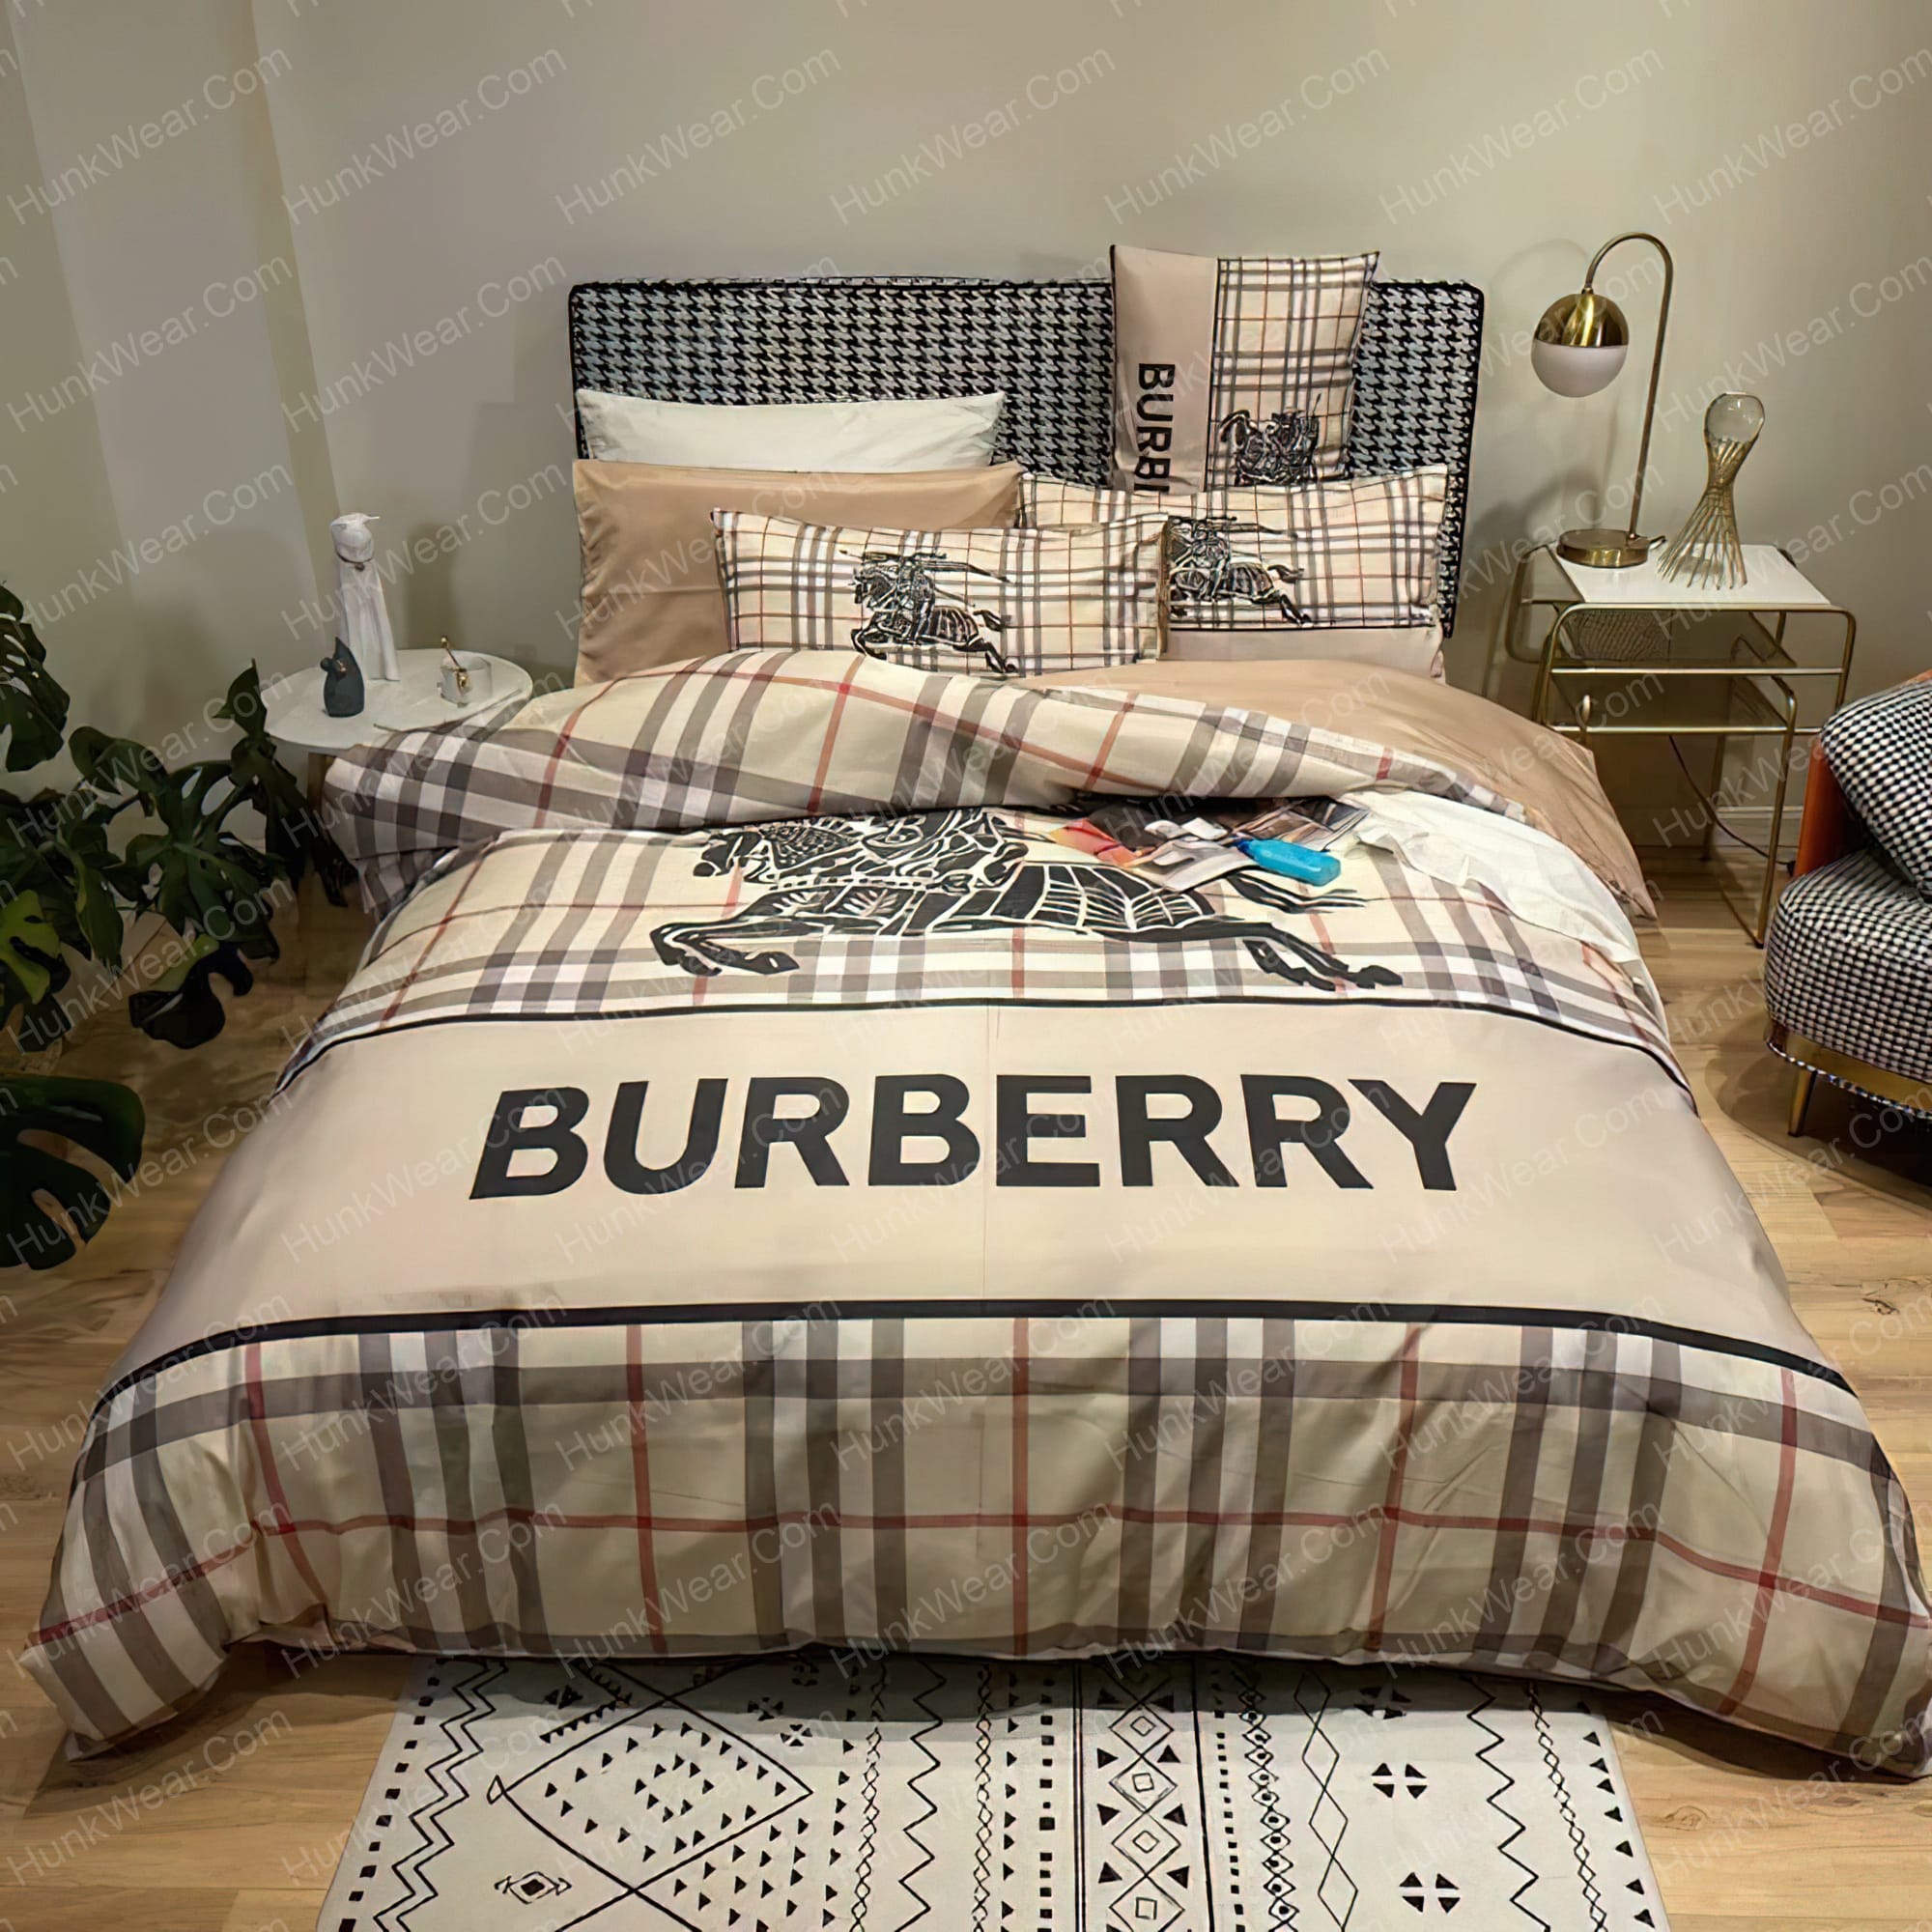 burberry bedding sets